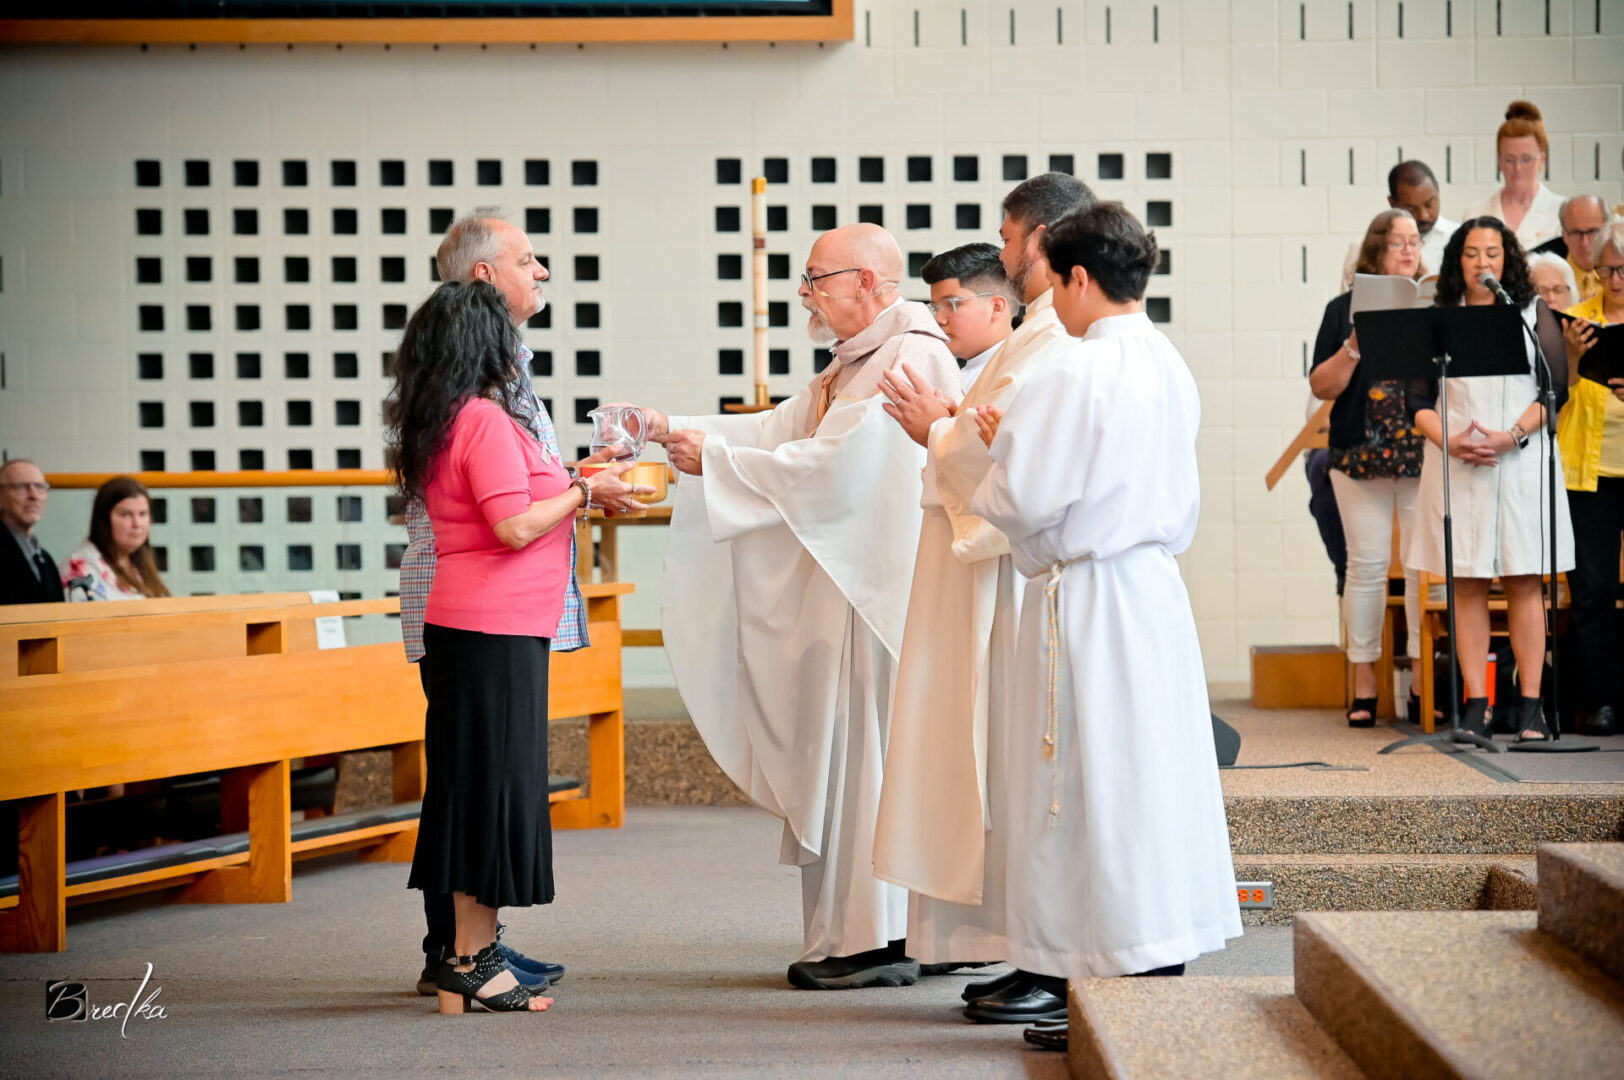 A woman receives communion during a church service.